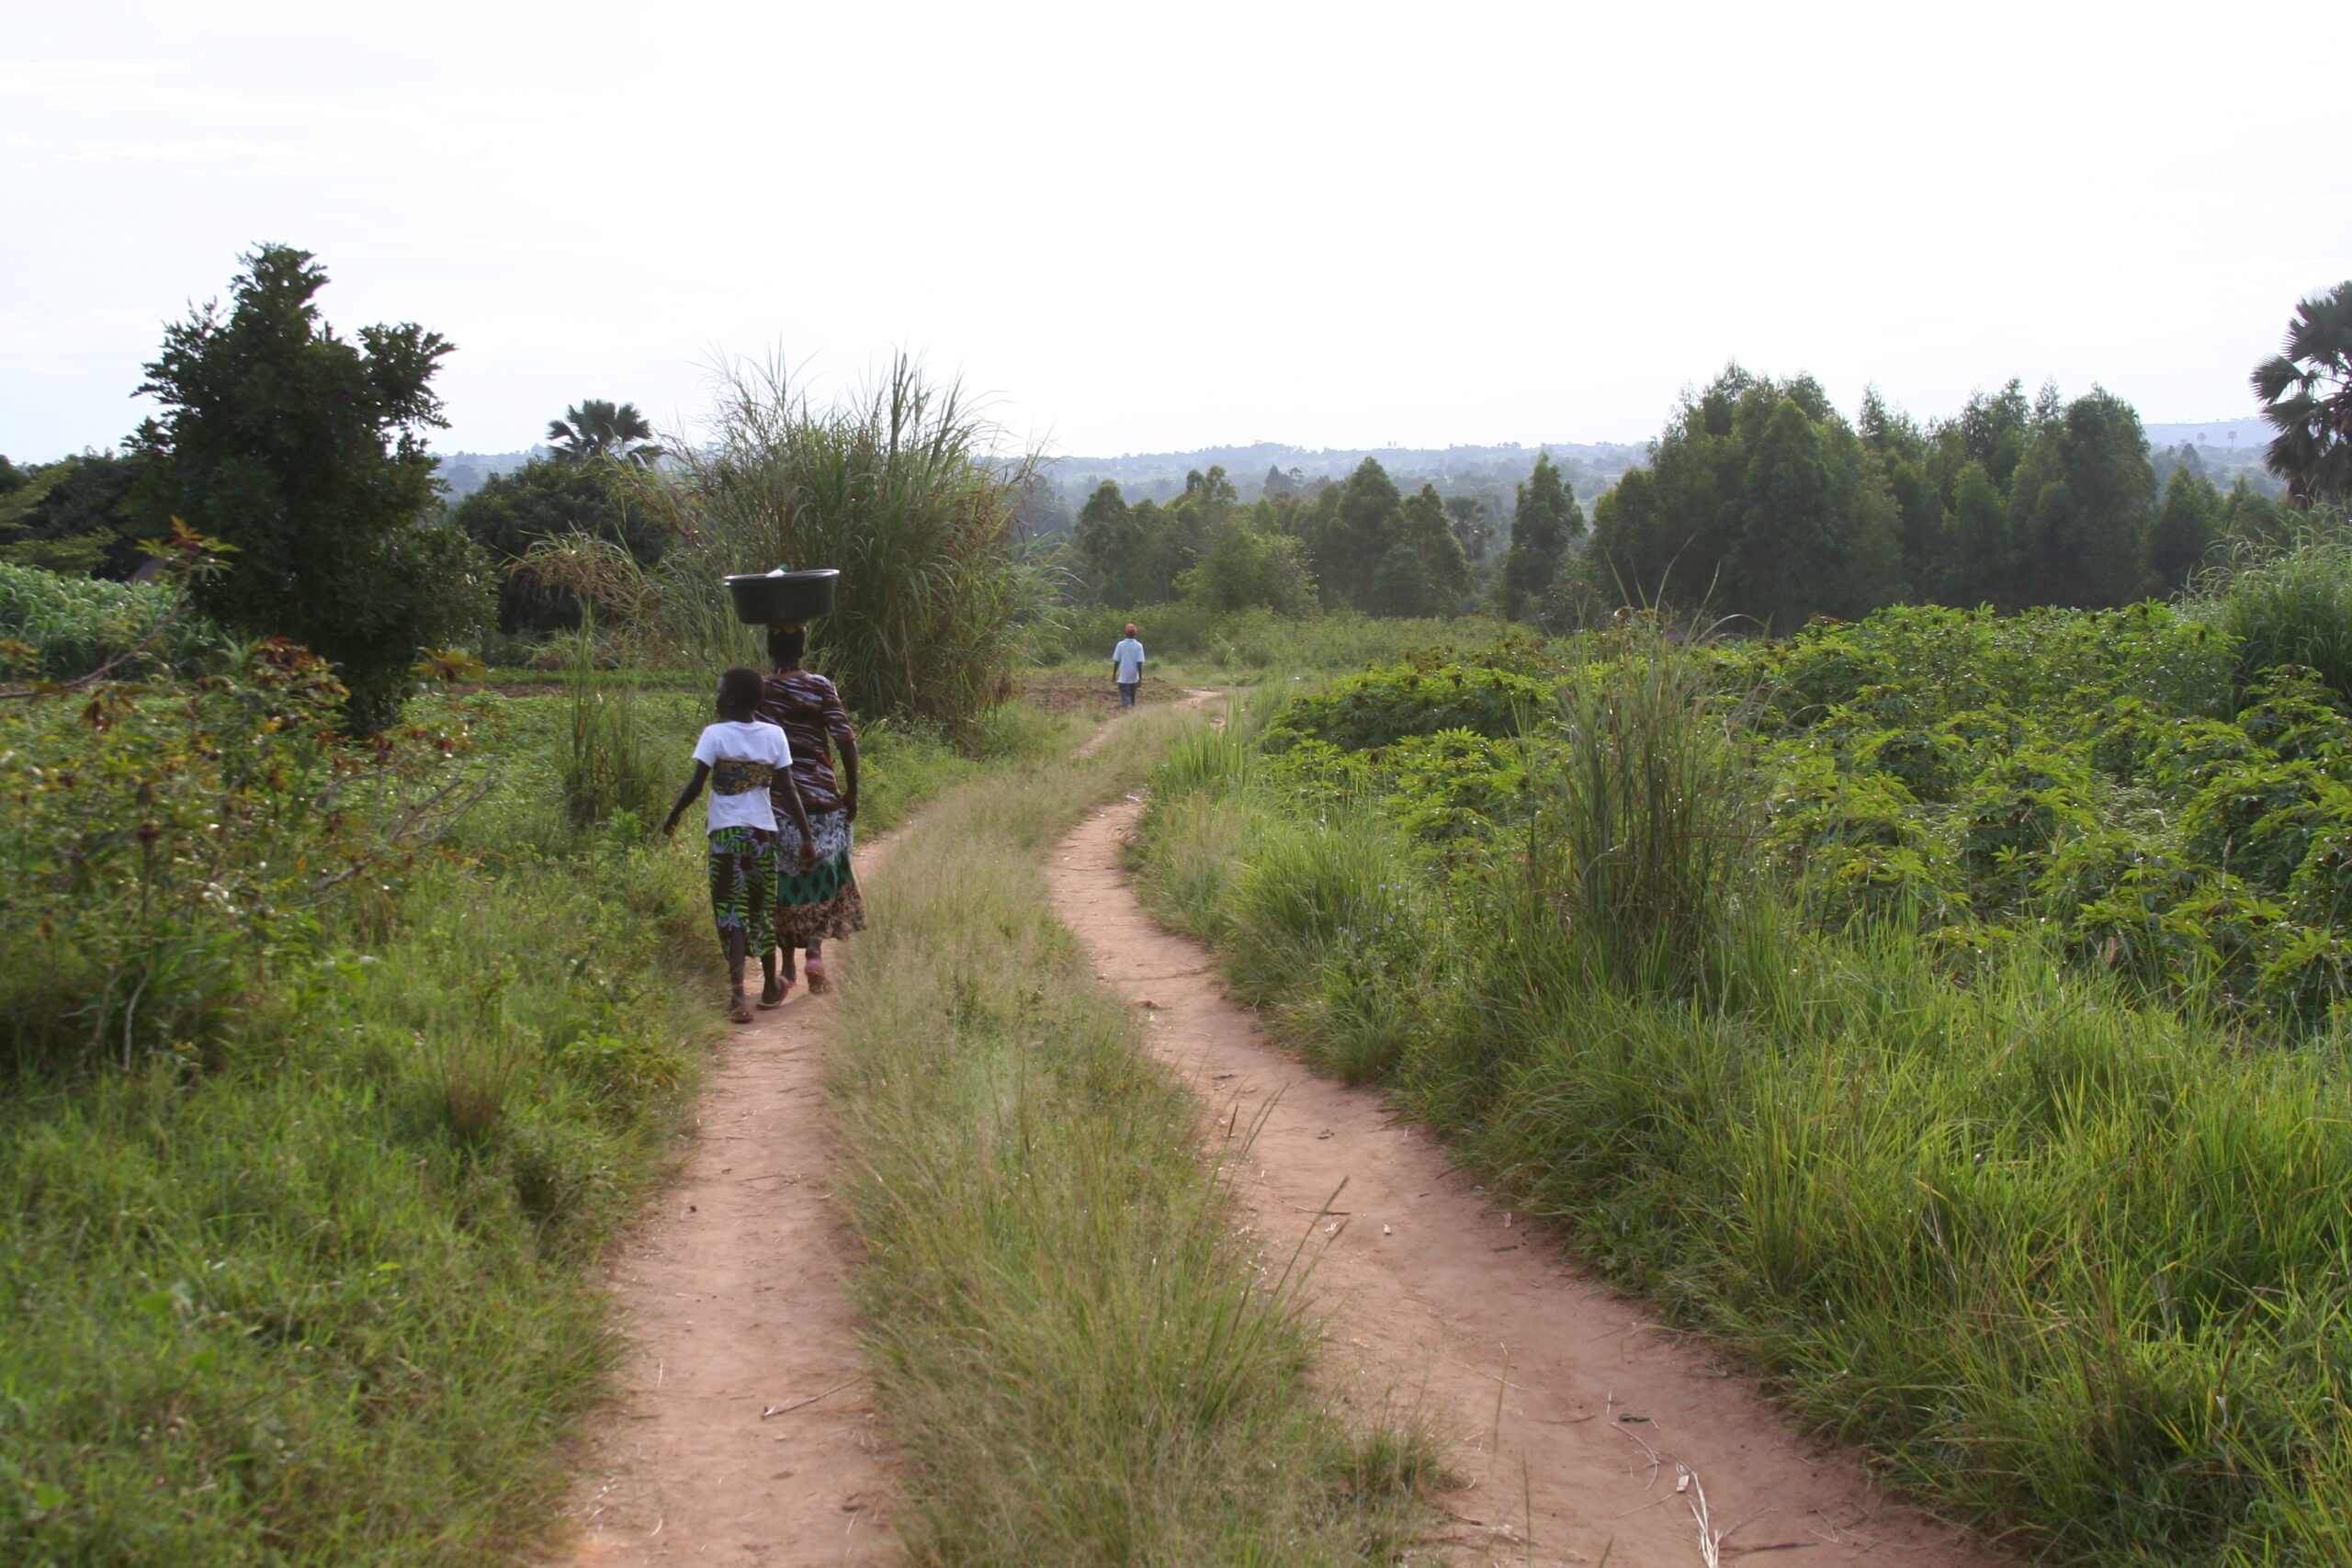 People walk along a dirt road in the Ndrulo area of Uganda